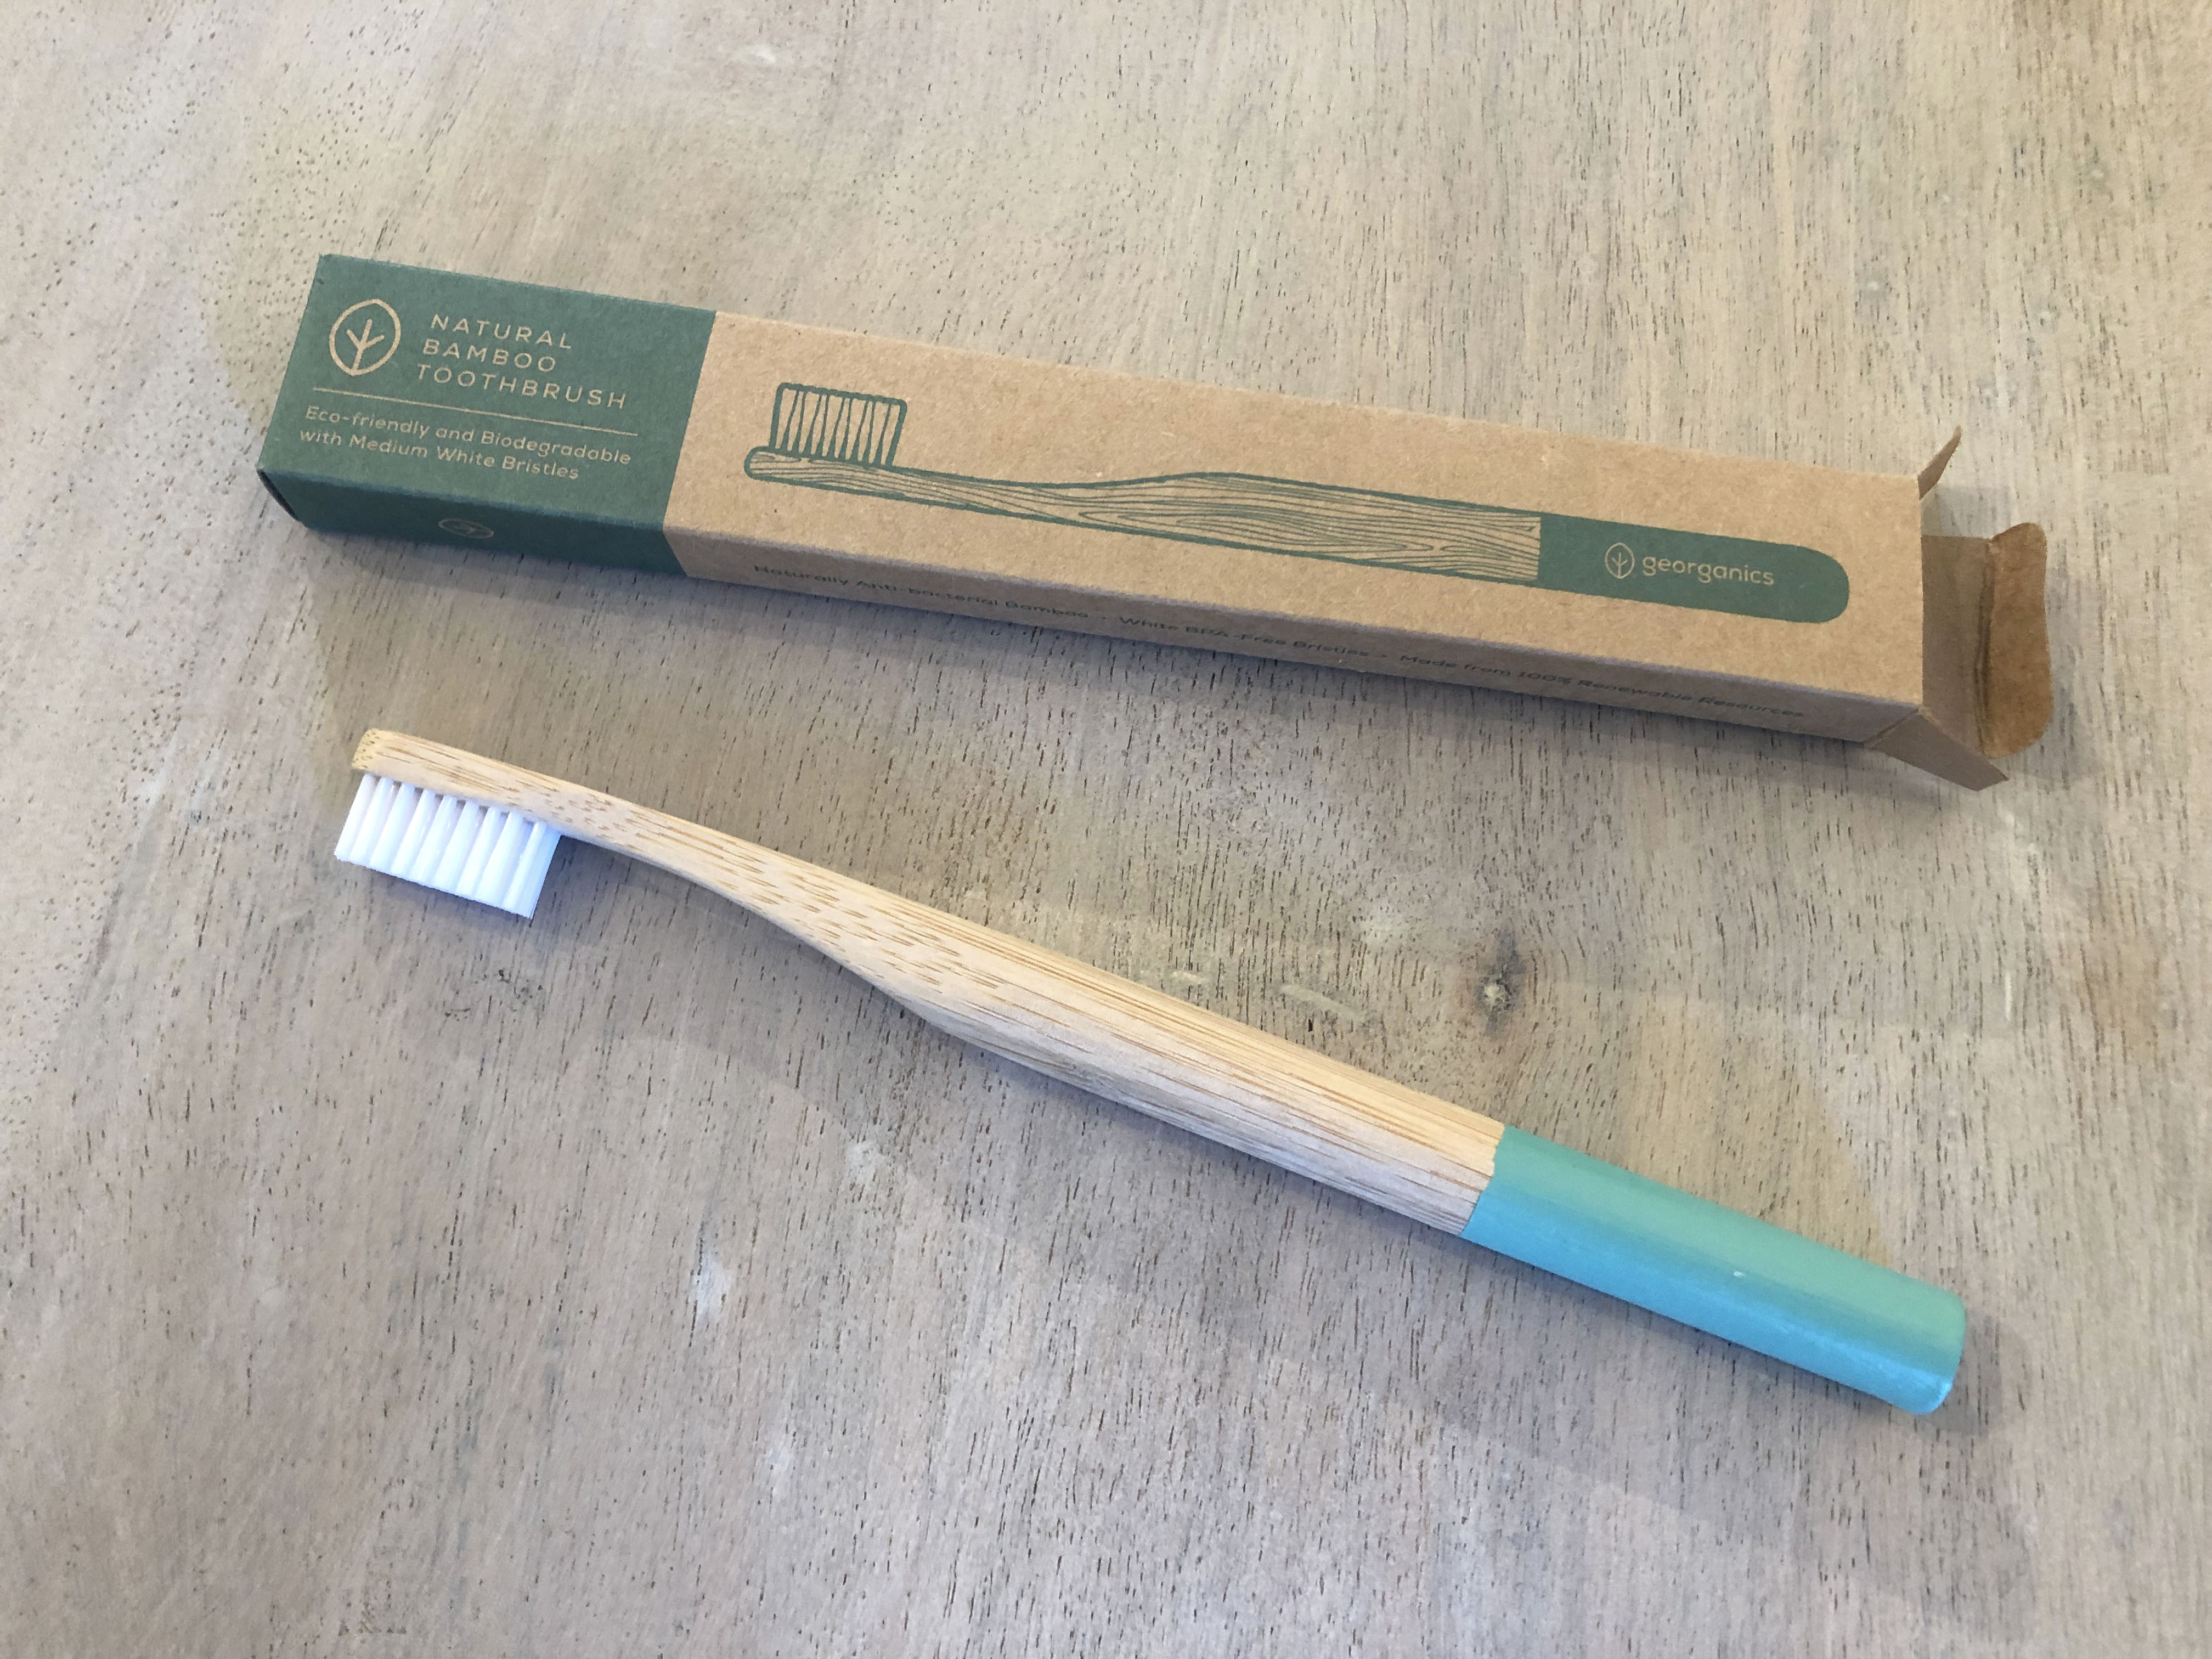 Georganics bamboo eco-friendly toothbrush